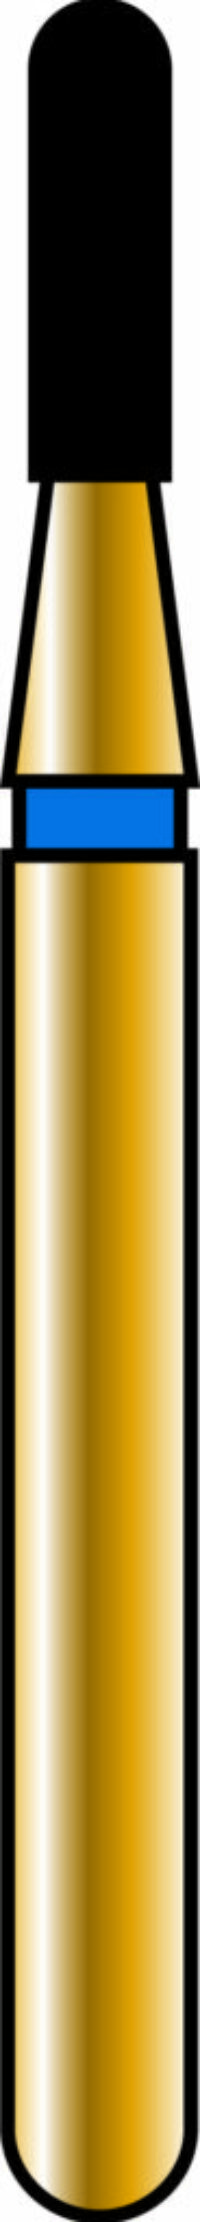 Round End Cylinder 12-4mm Gold Diamond Bur - Coarse Grit